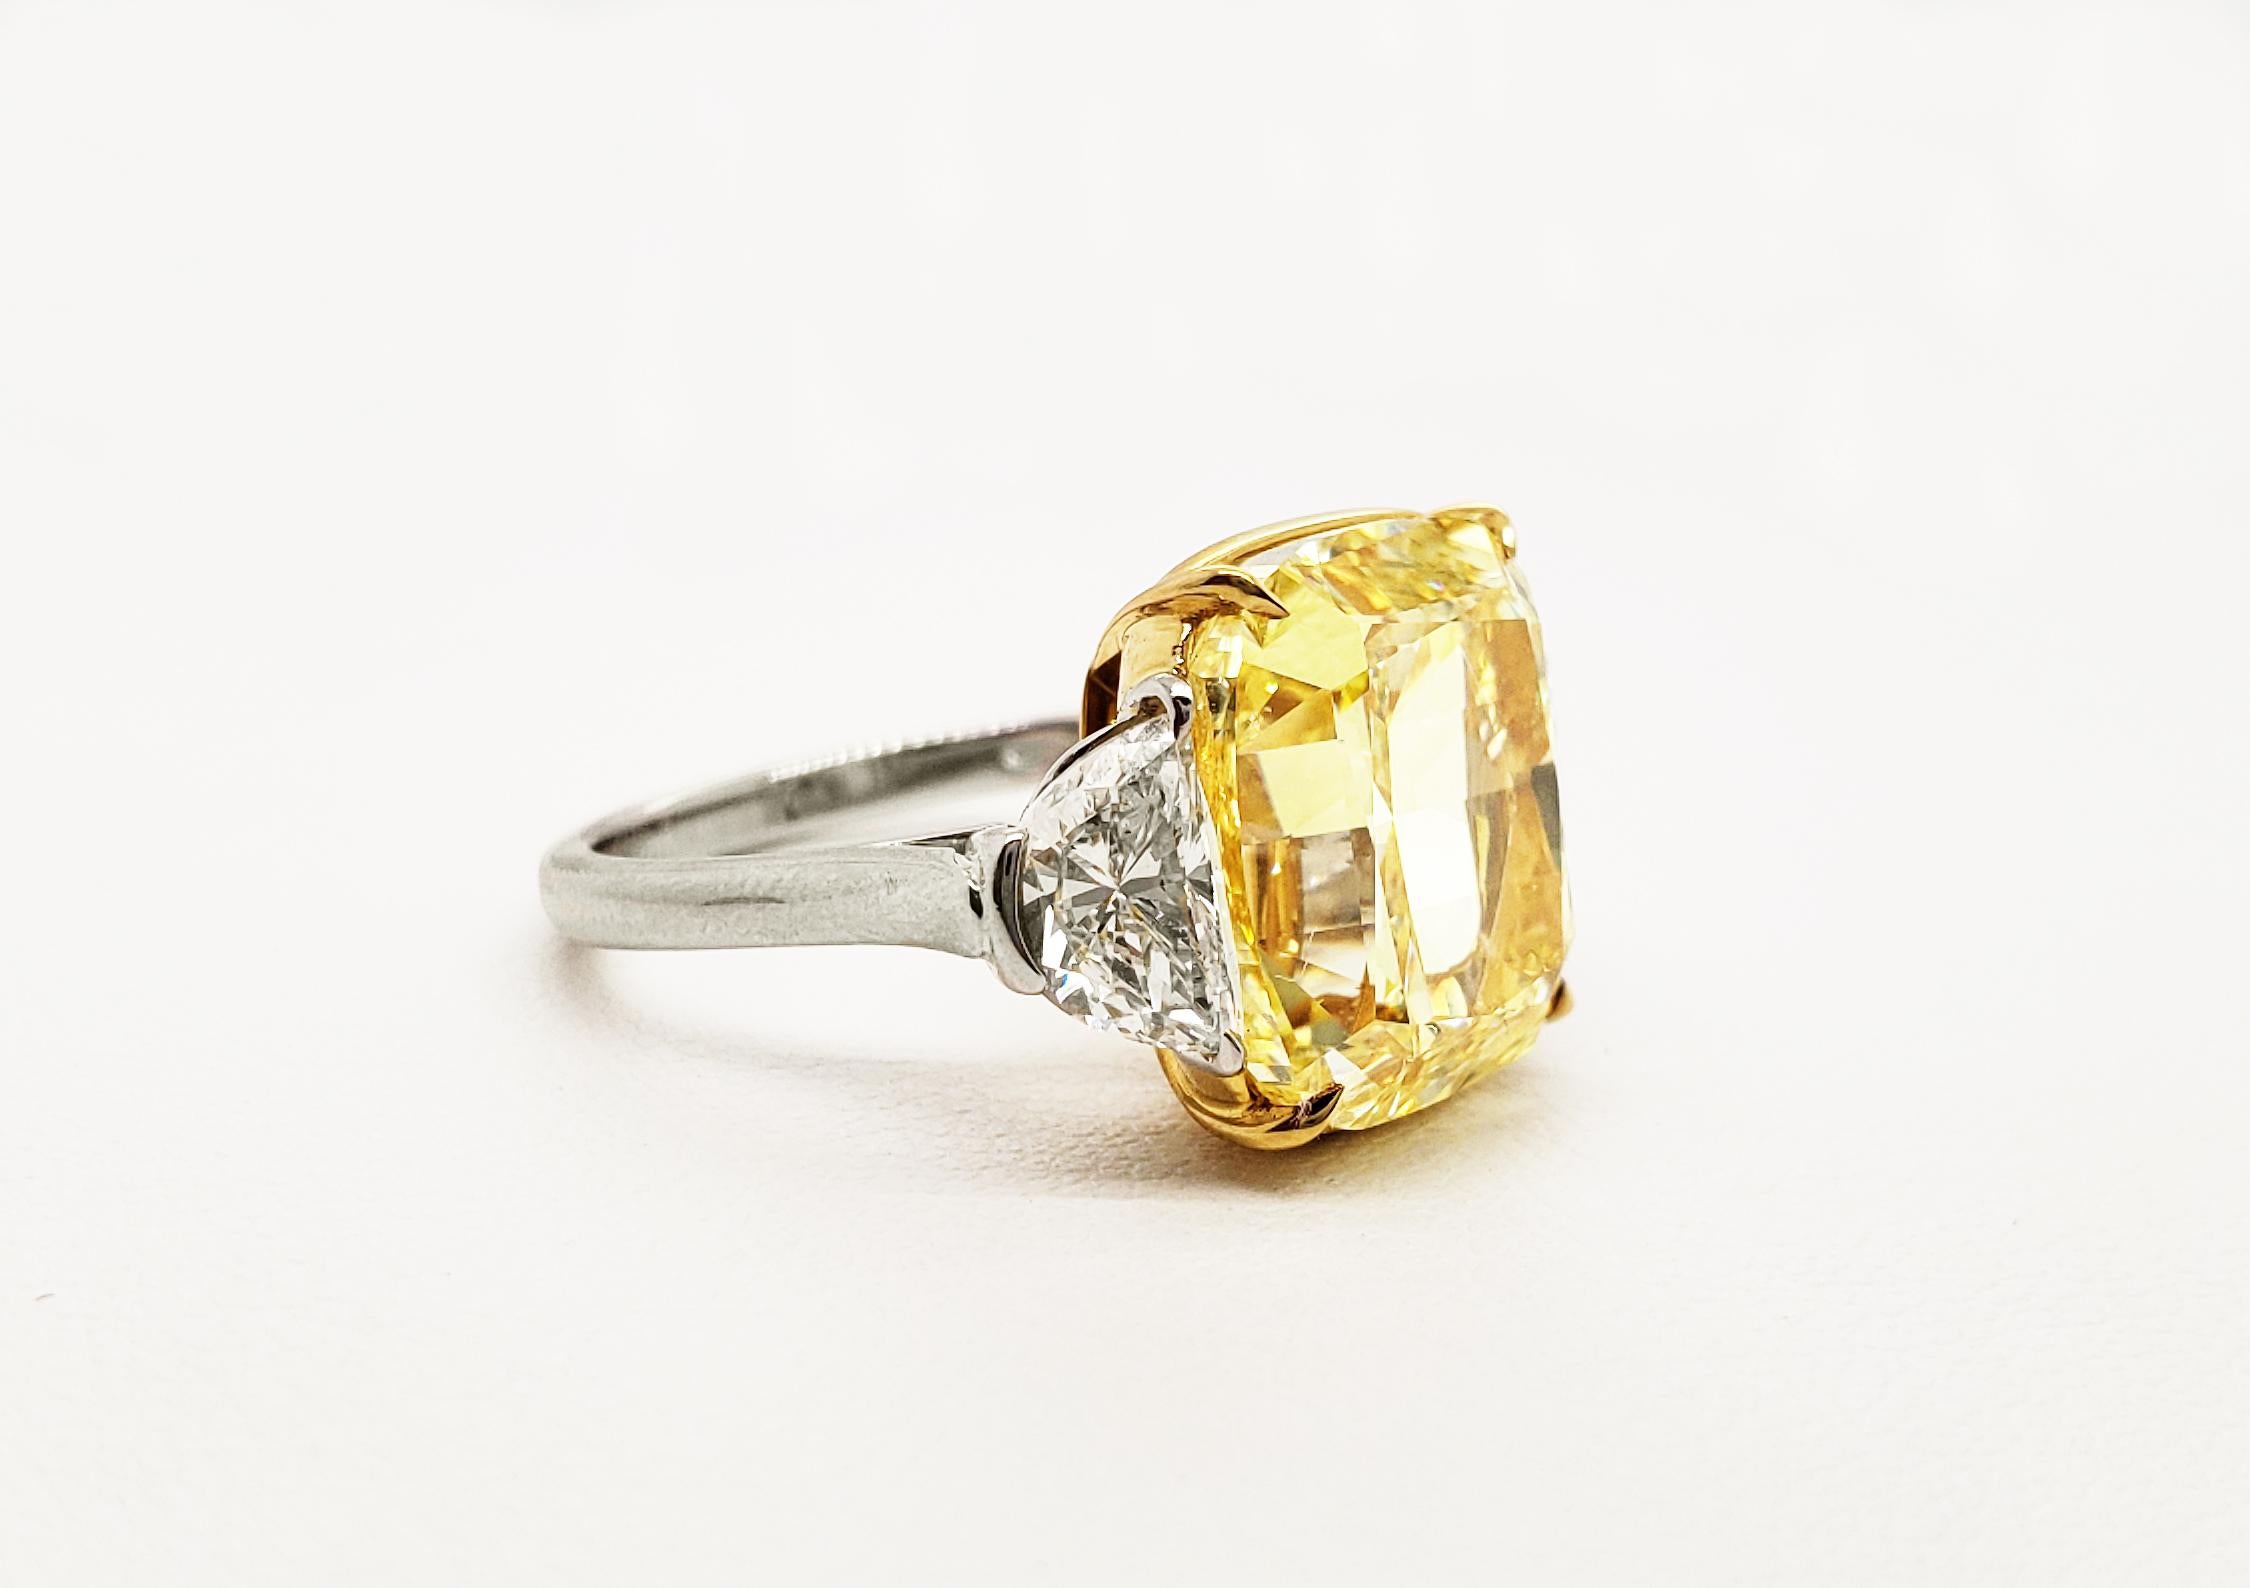 10 carat yellow diamond ring